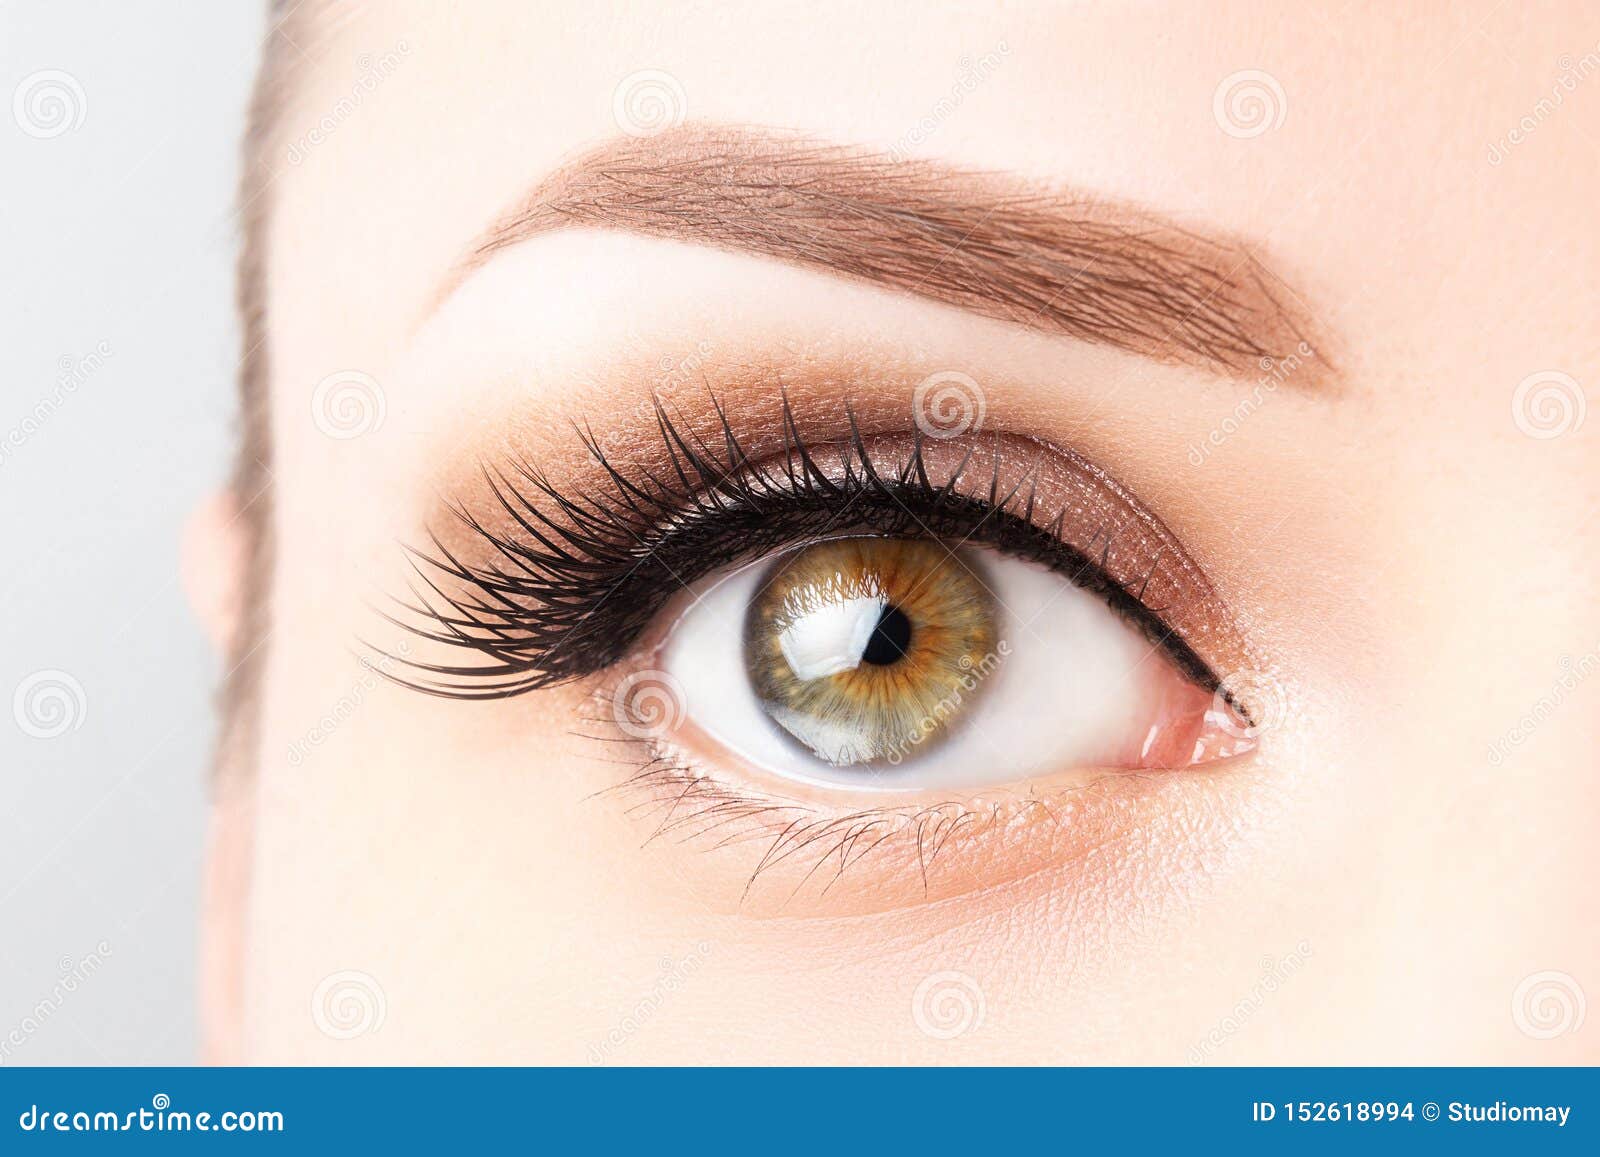 female eye with long eyelashes, beautiful makeup and light brown eyebrow close-up. eyelash extensions, lamination, microblading,